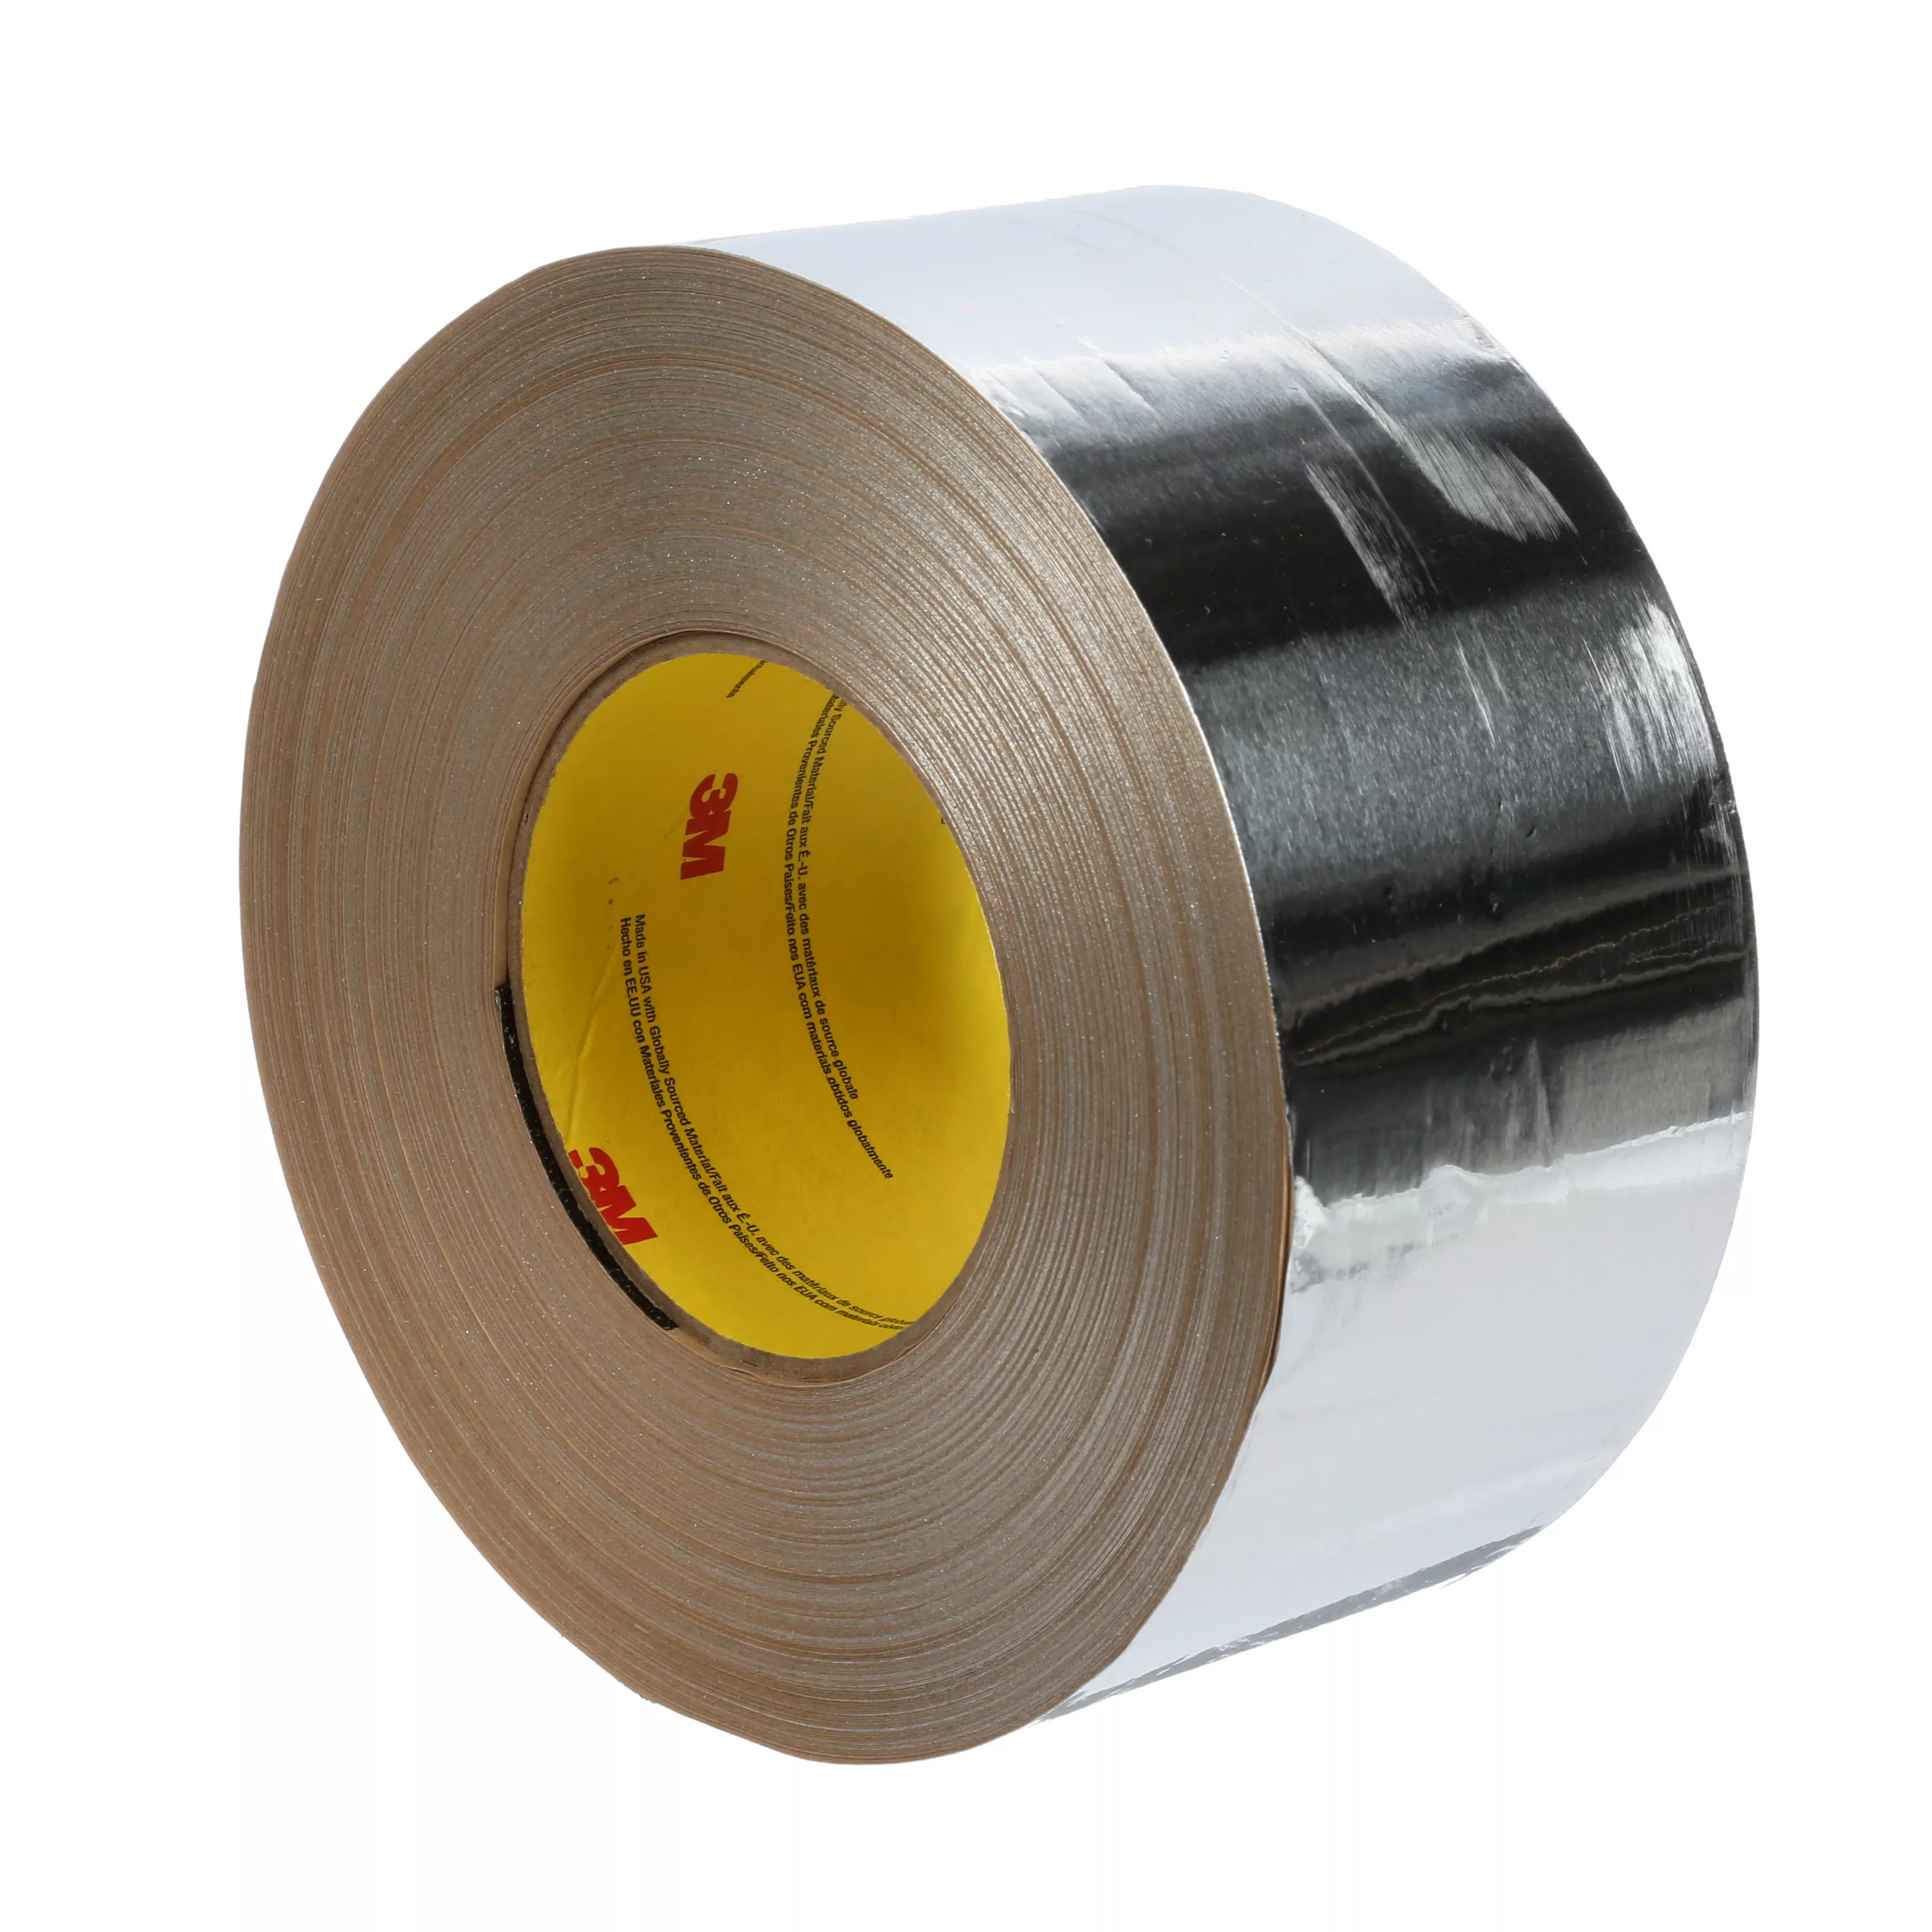 SKU 7100169857 | 3M™ Venture Tape™ Aluminum Foil Tape 1520CW